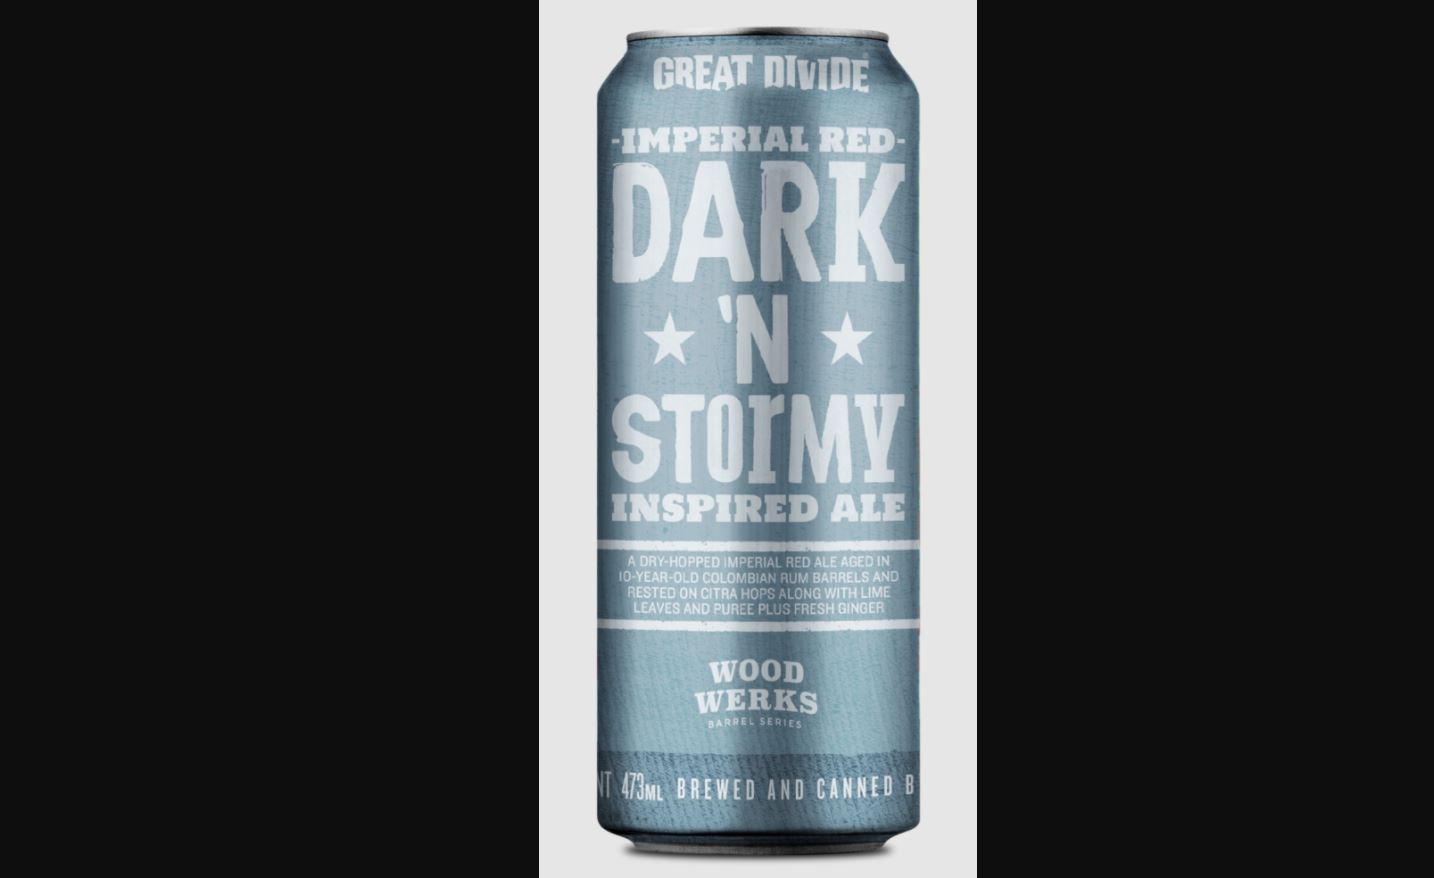 Great Divide Wood Works Dark ’N Stormy Imperial Red Inspired Ale